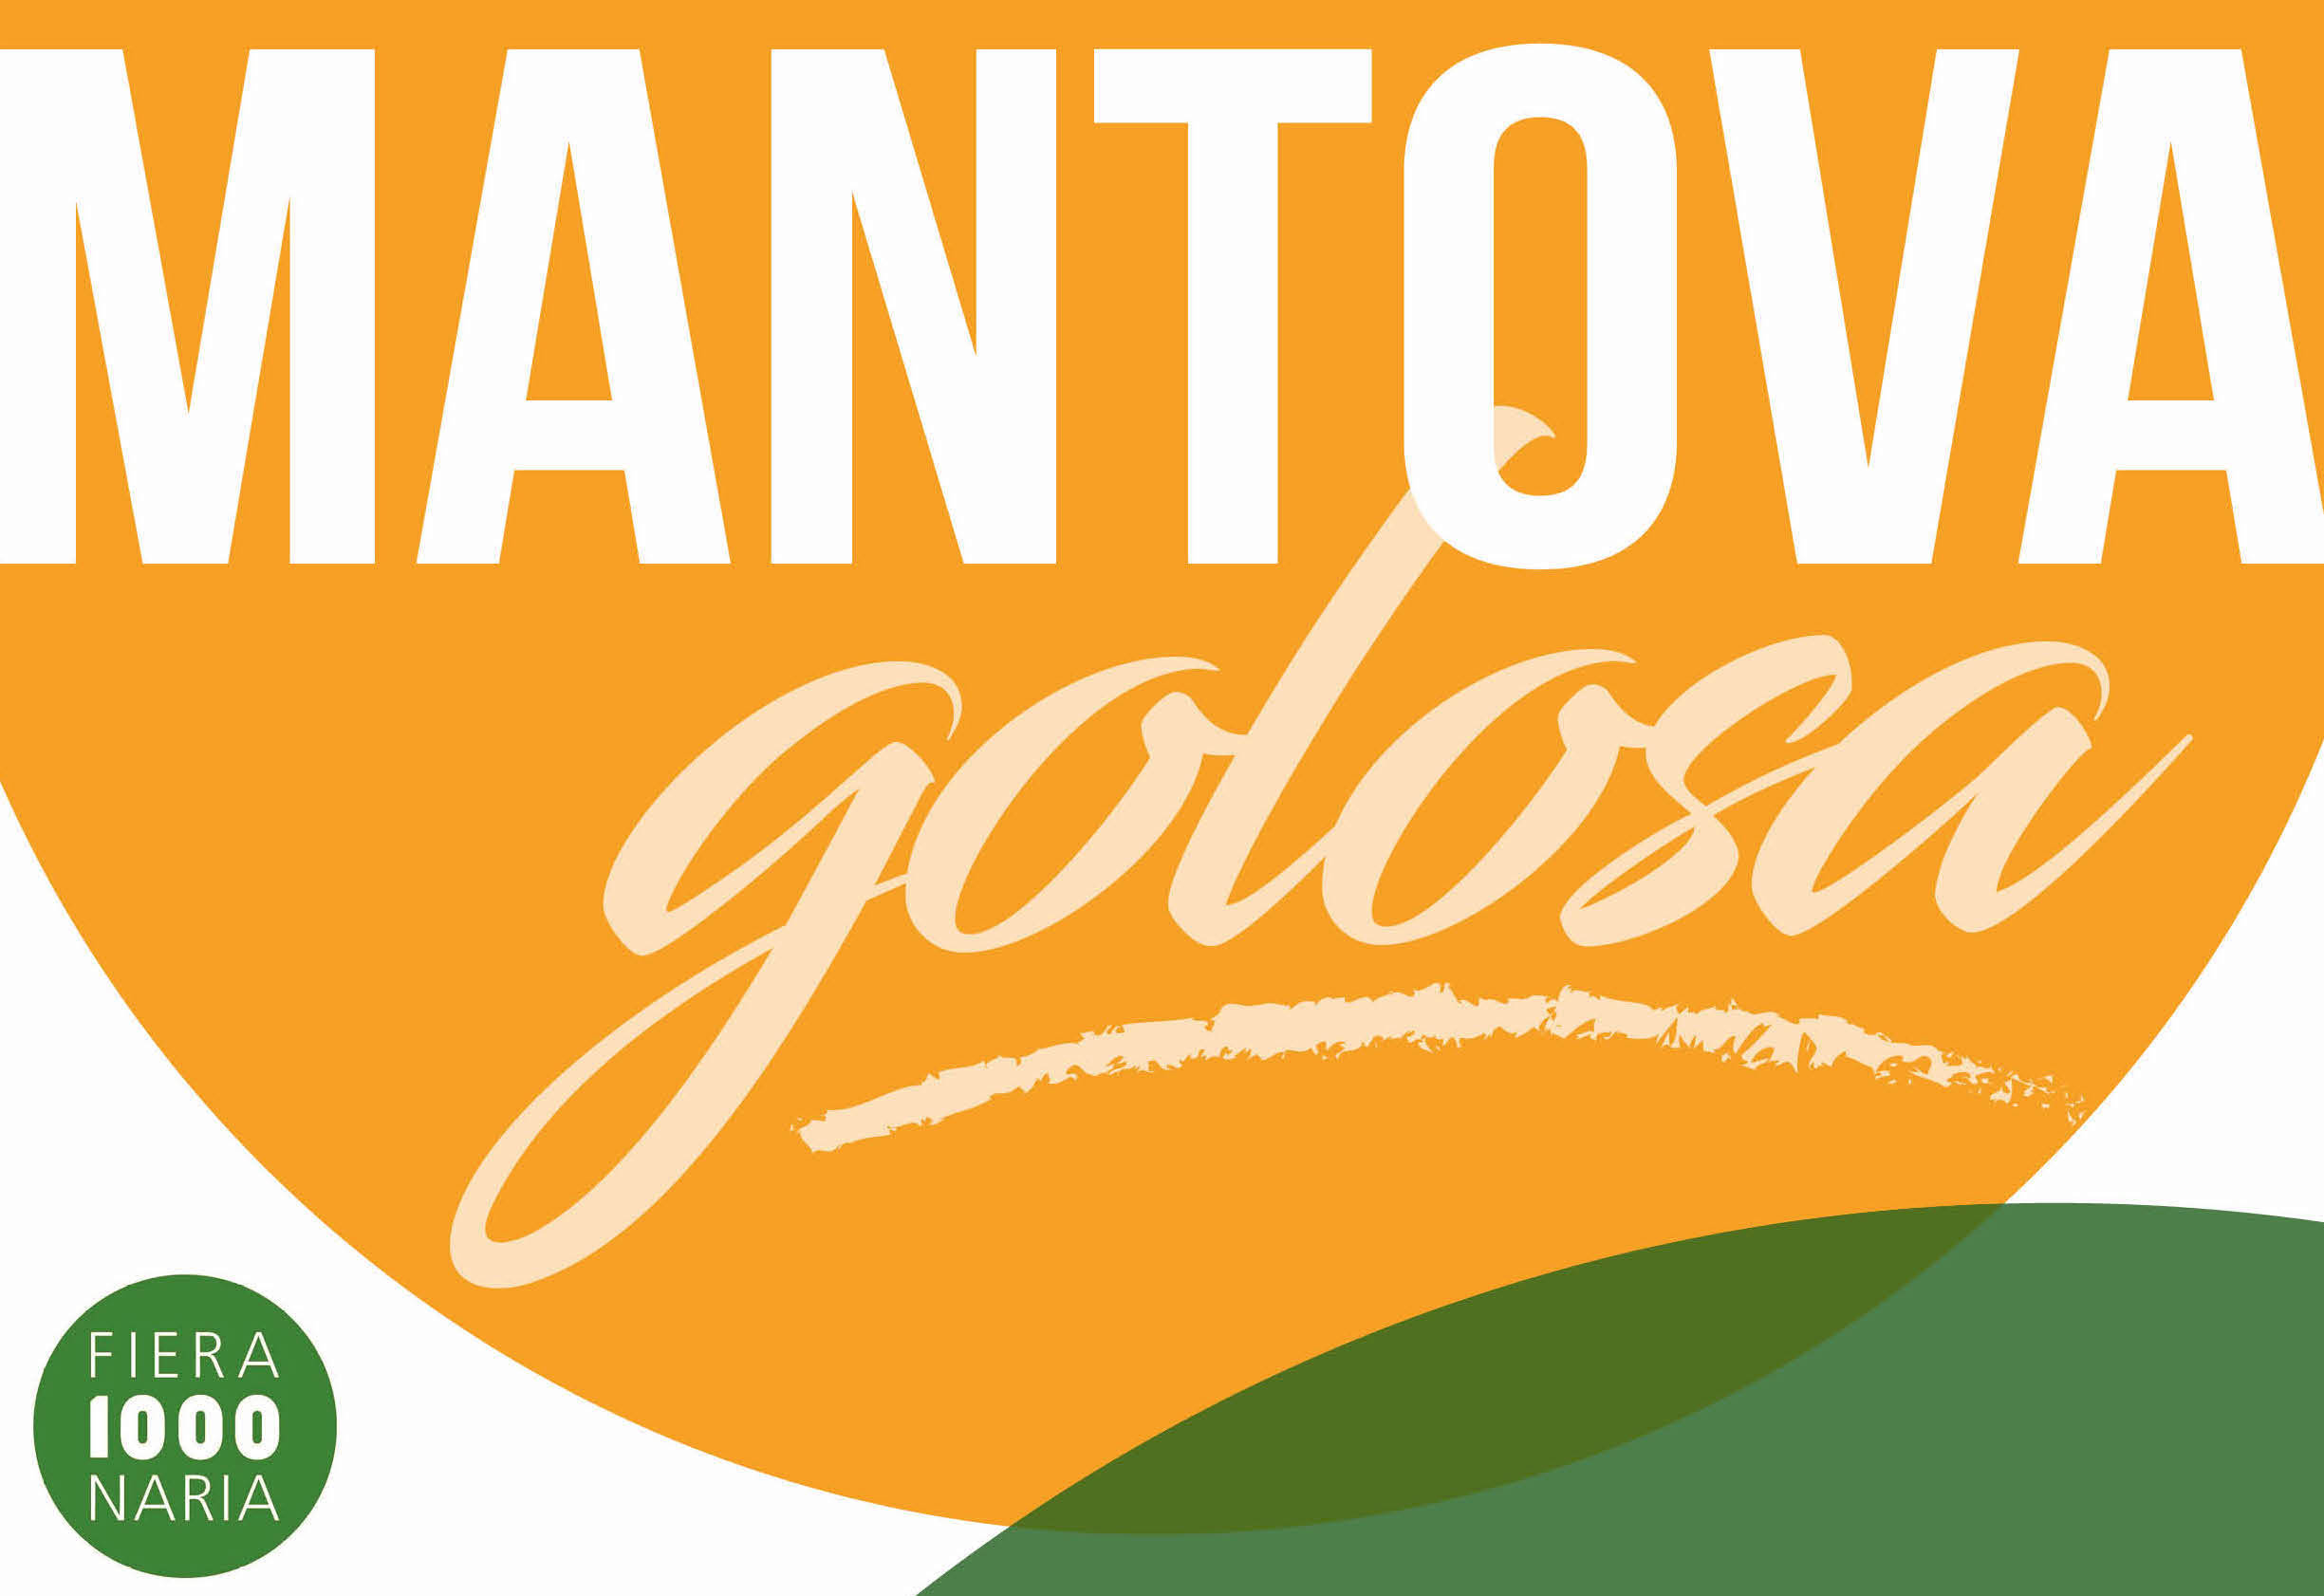 Mantova Golosa: in Gonzaga with the “made in Mantua”